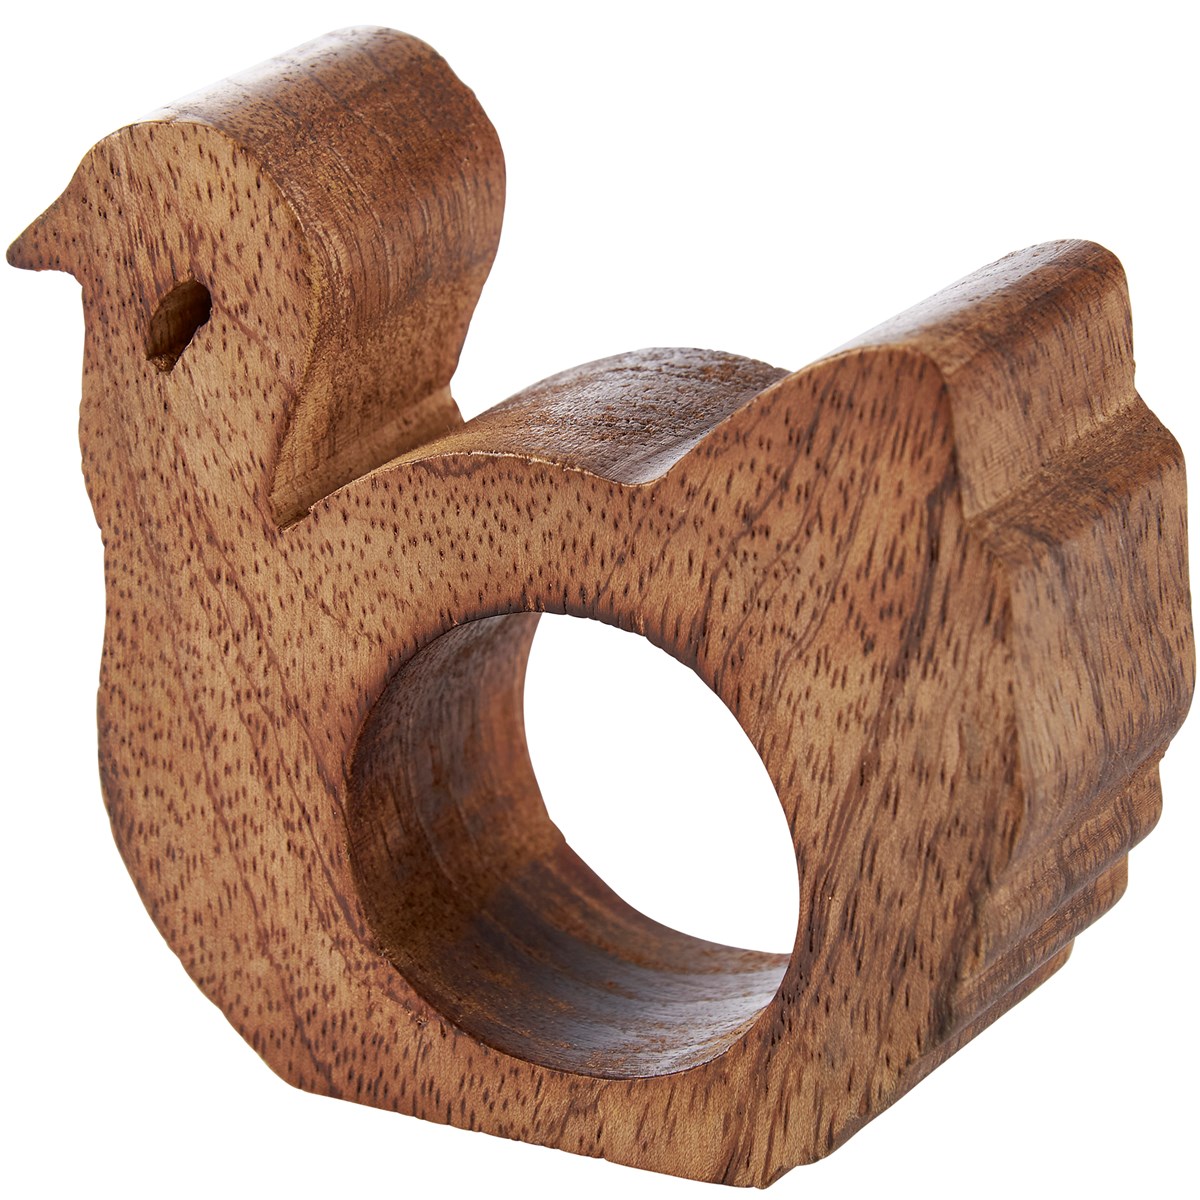 Turkey Napkin Ring - Wood